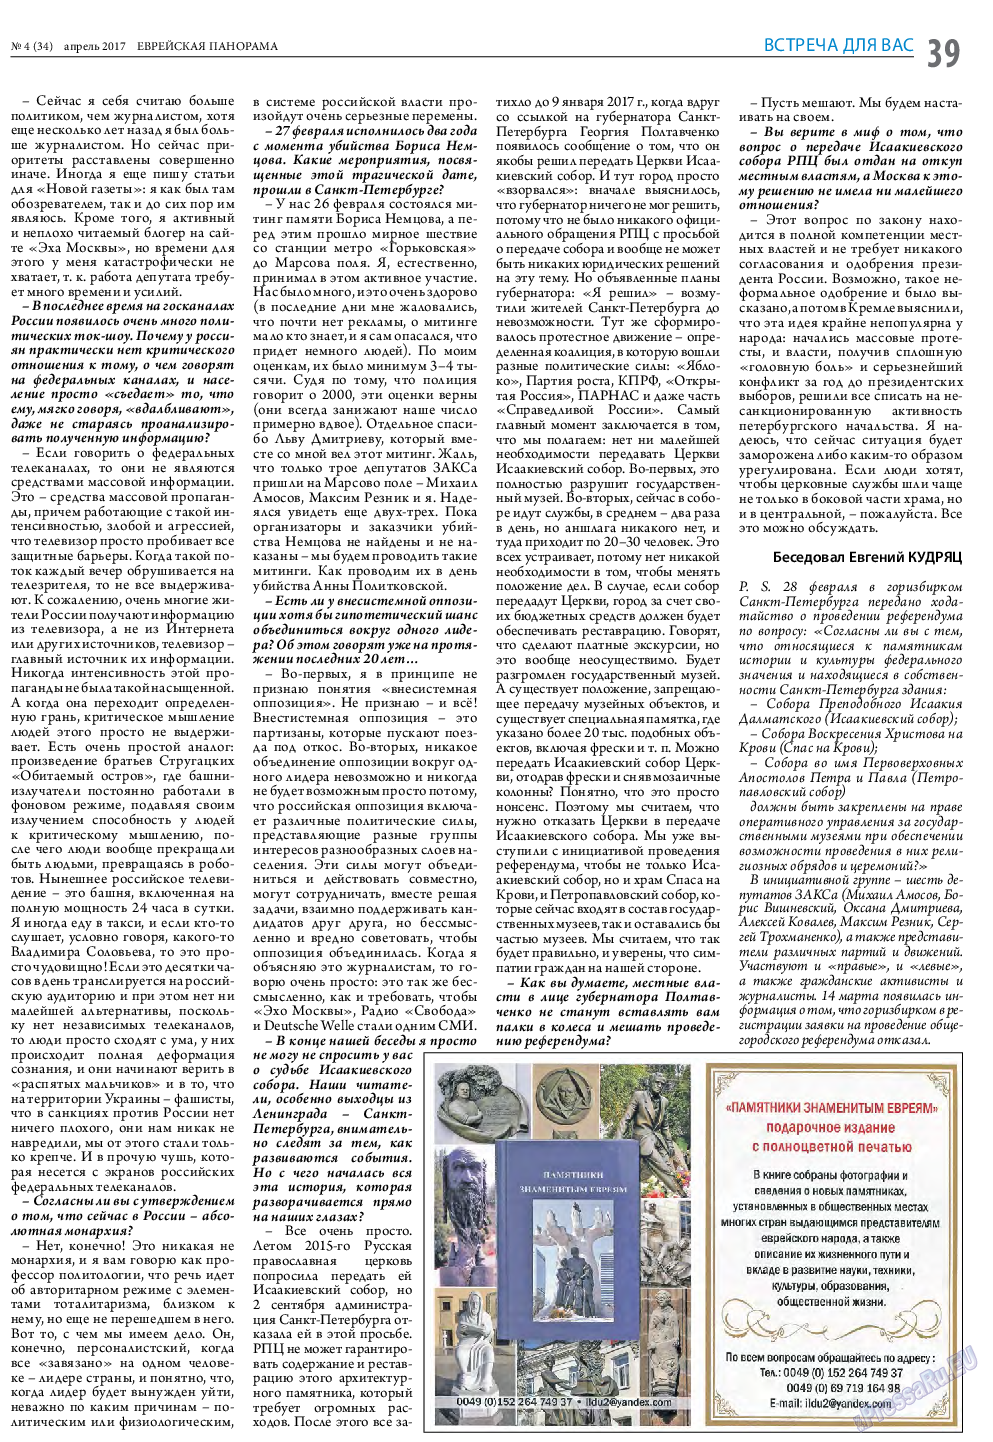 Еврейская панорама, газета. 2017 №4 стр.39